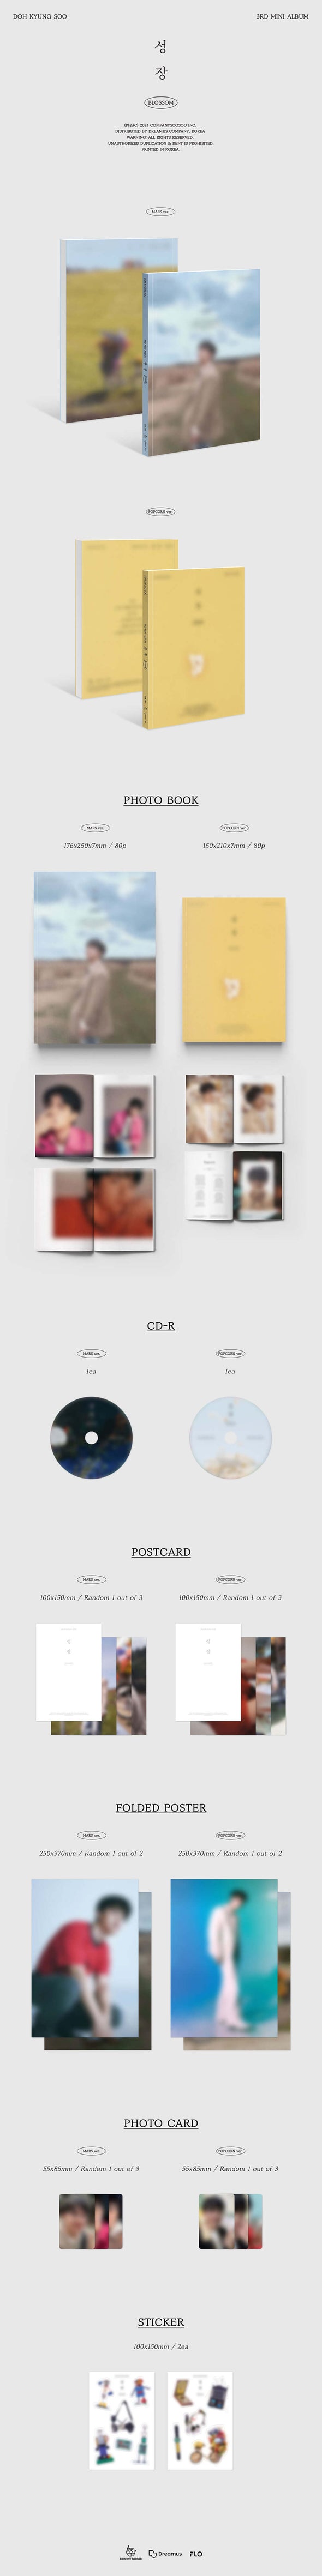 D.O 도경수 - 3rd Mini Album (MARS)